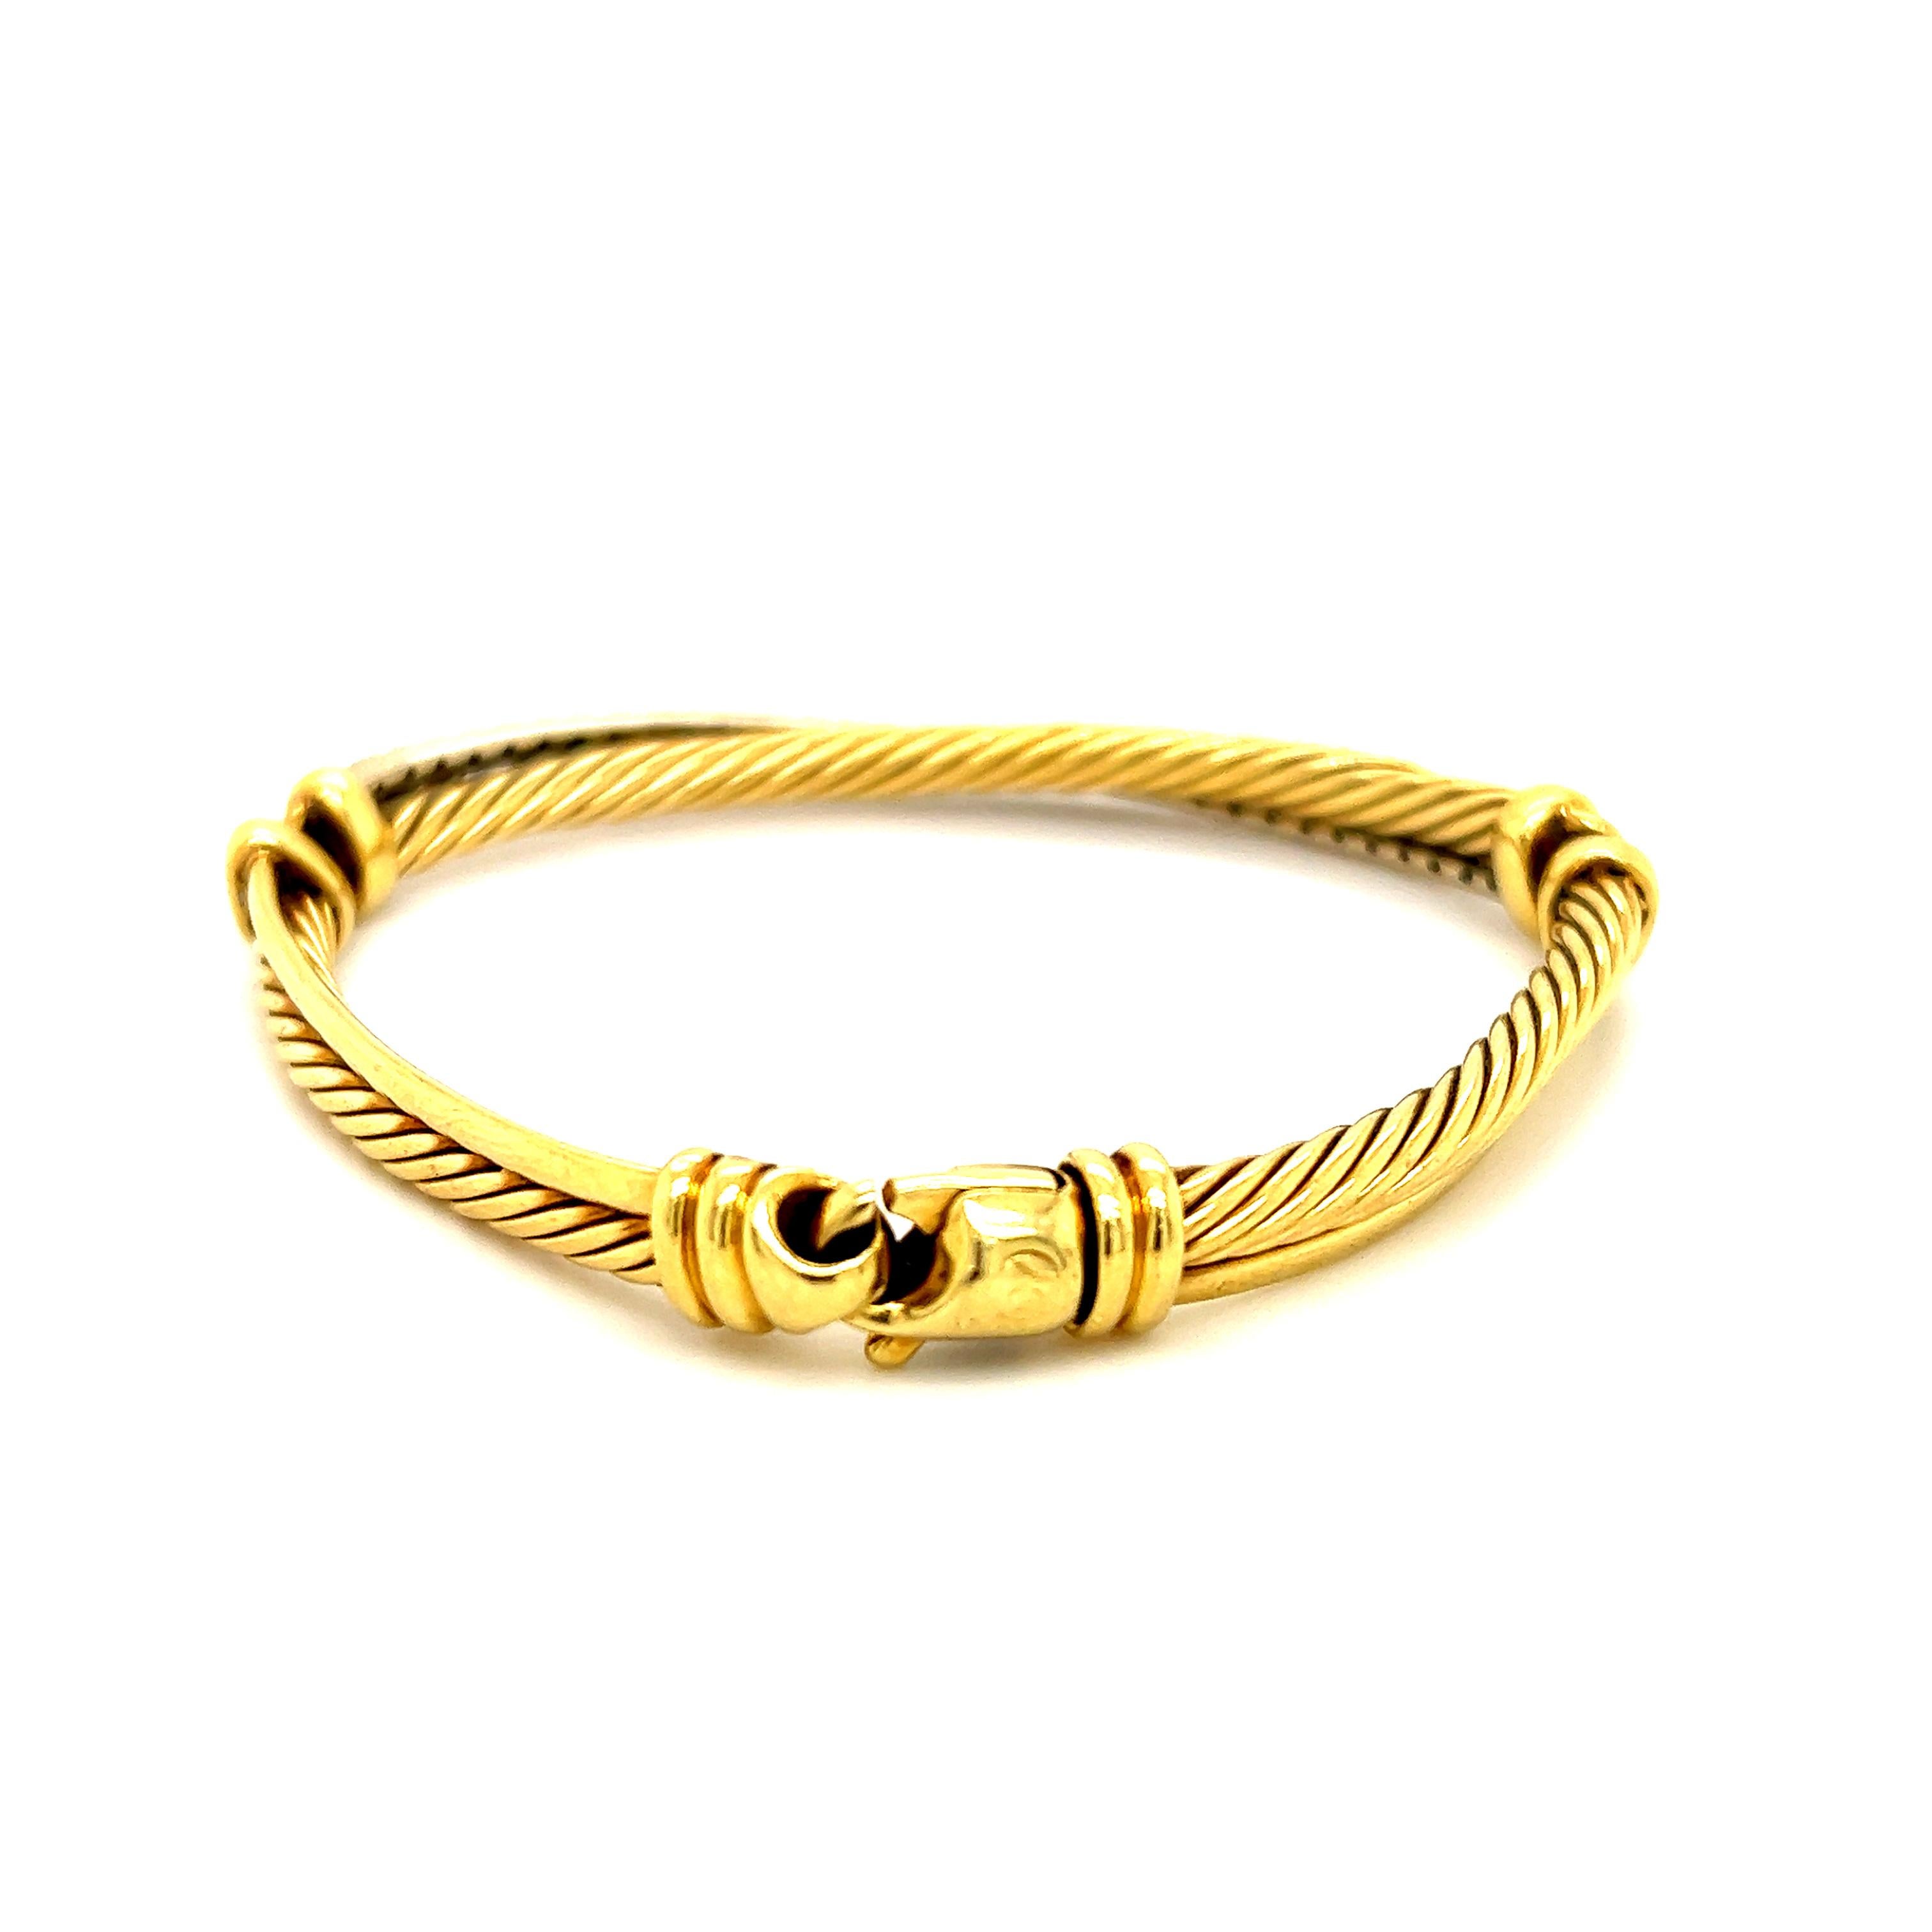 david yurman crossover bracelet with gold